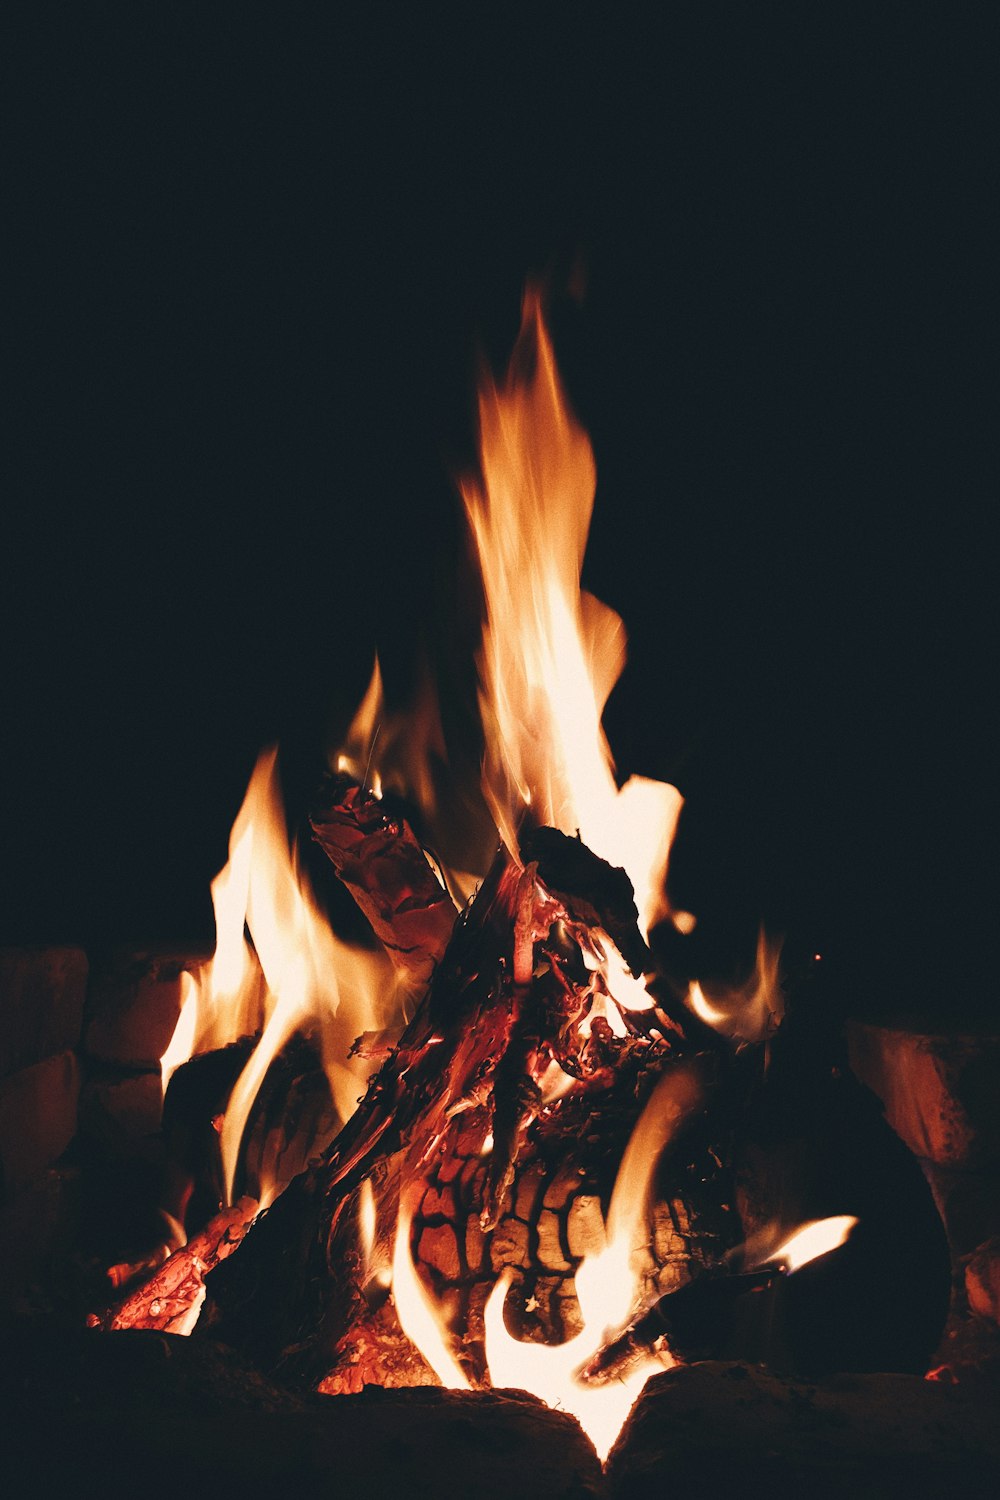 burning wood in black background